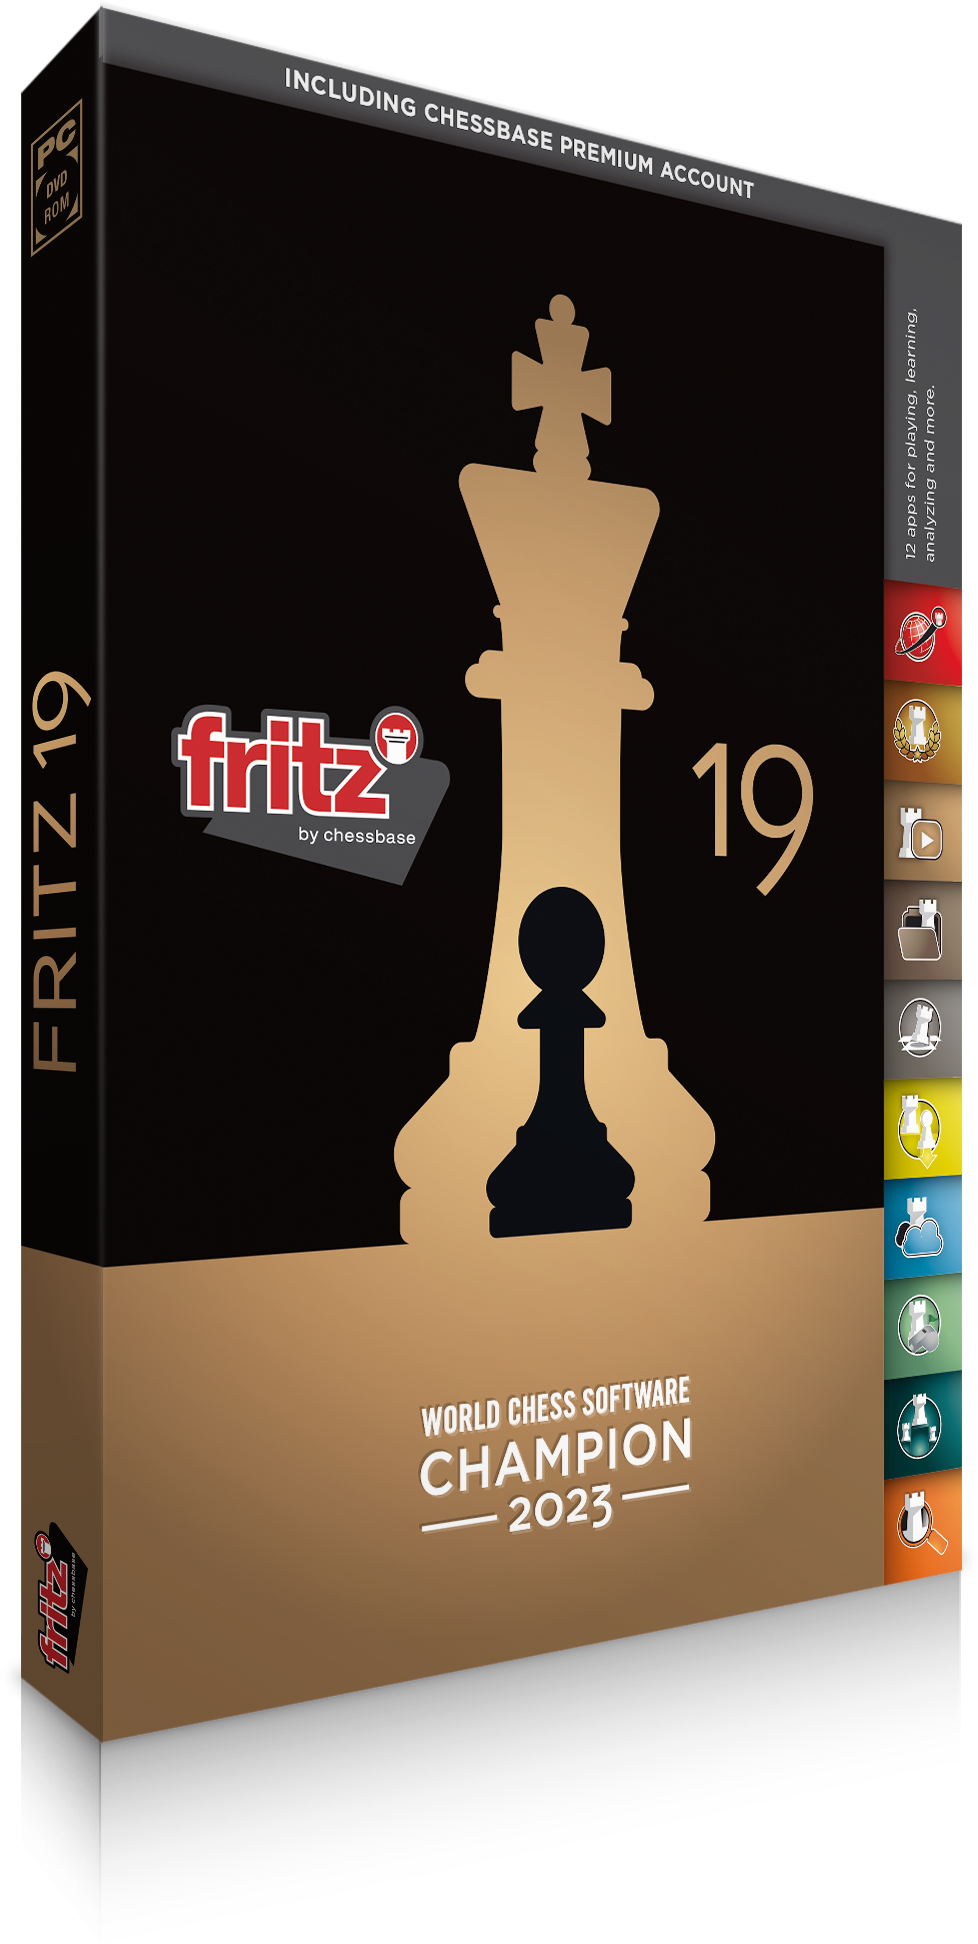 Fritz 19 Schachsoftware-Weltmeister 2023 (Download)